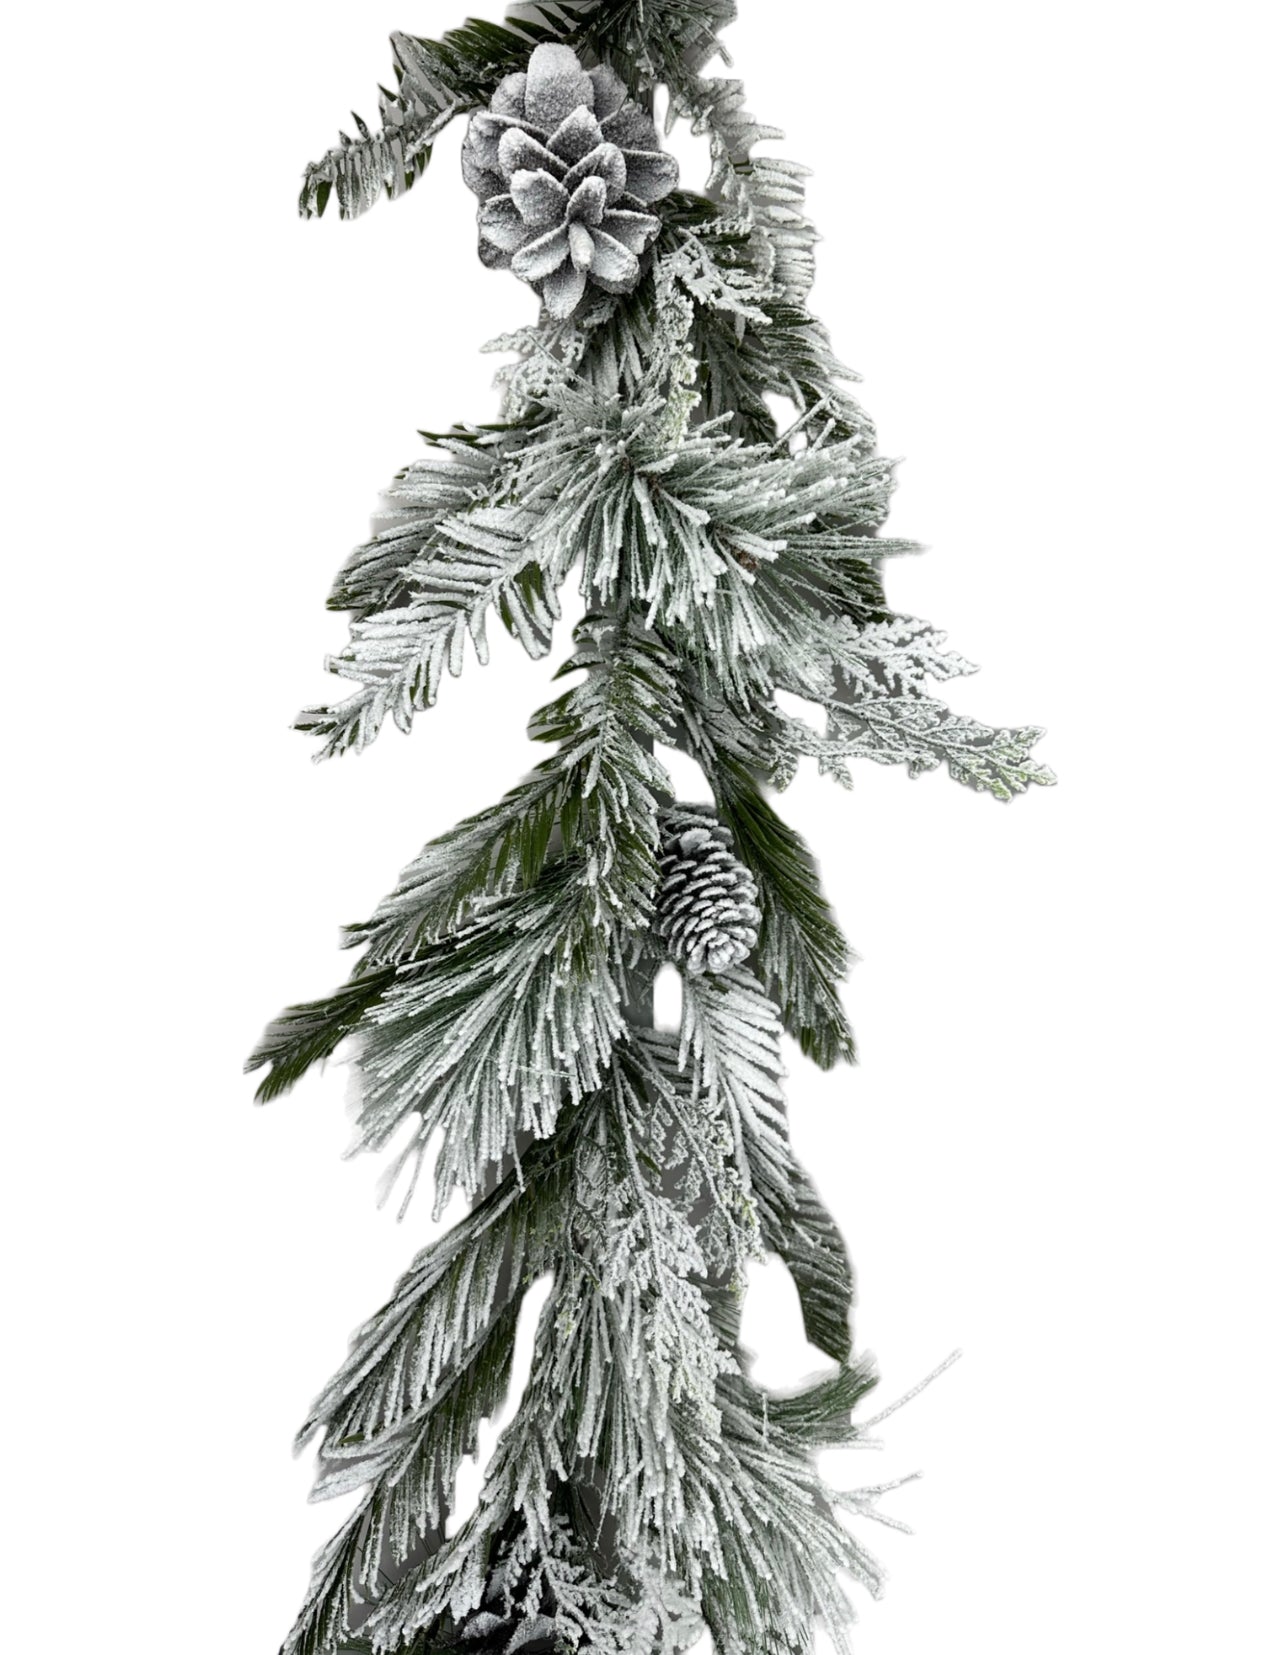 Winter flocked mixed pine garland 6’ - Greenery Marketgreenery85876GA6